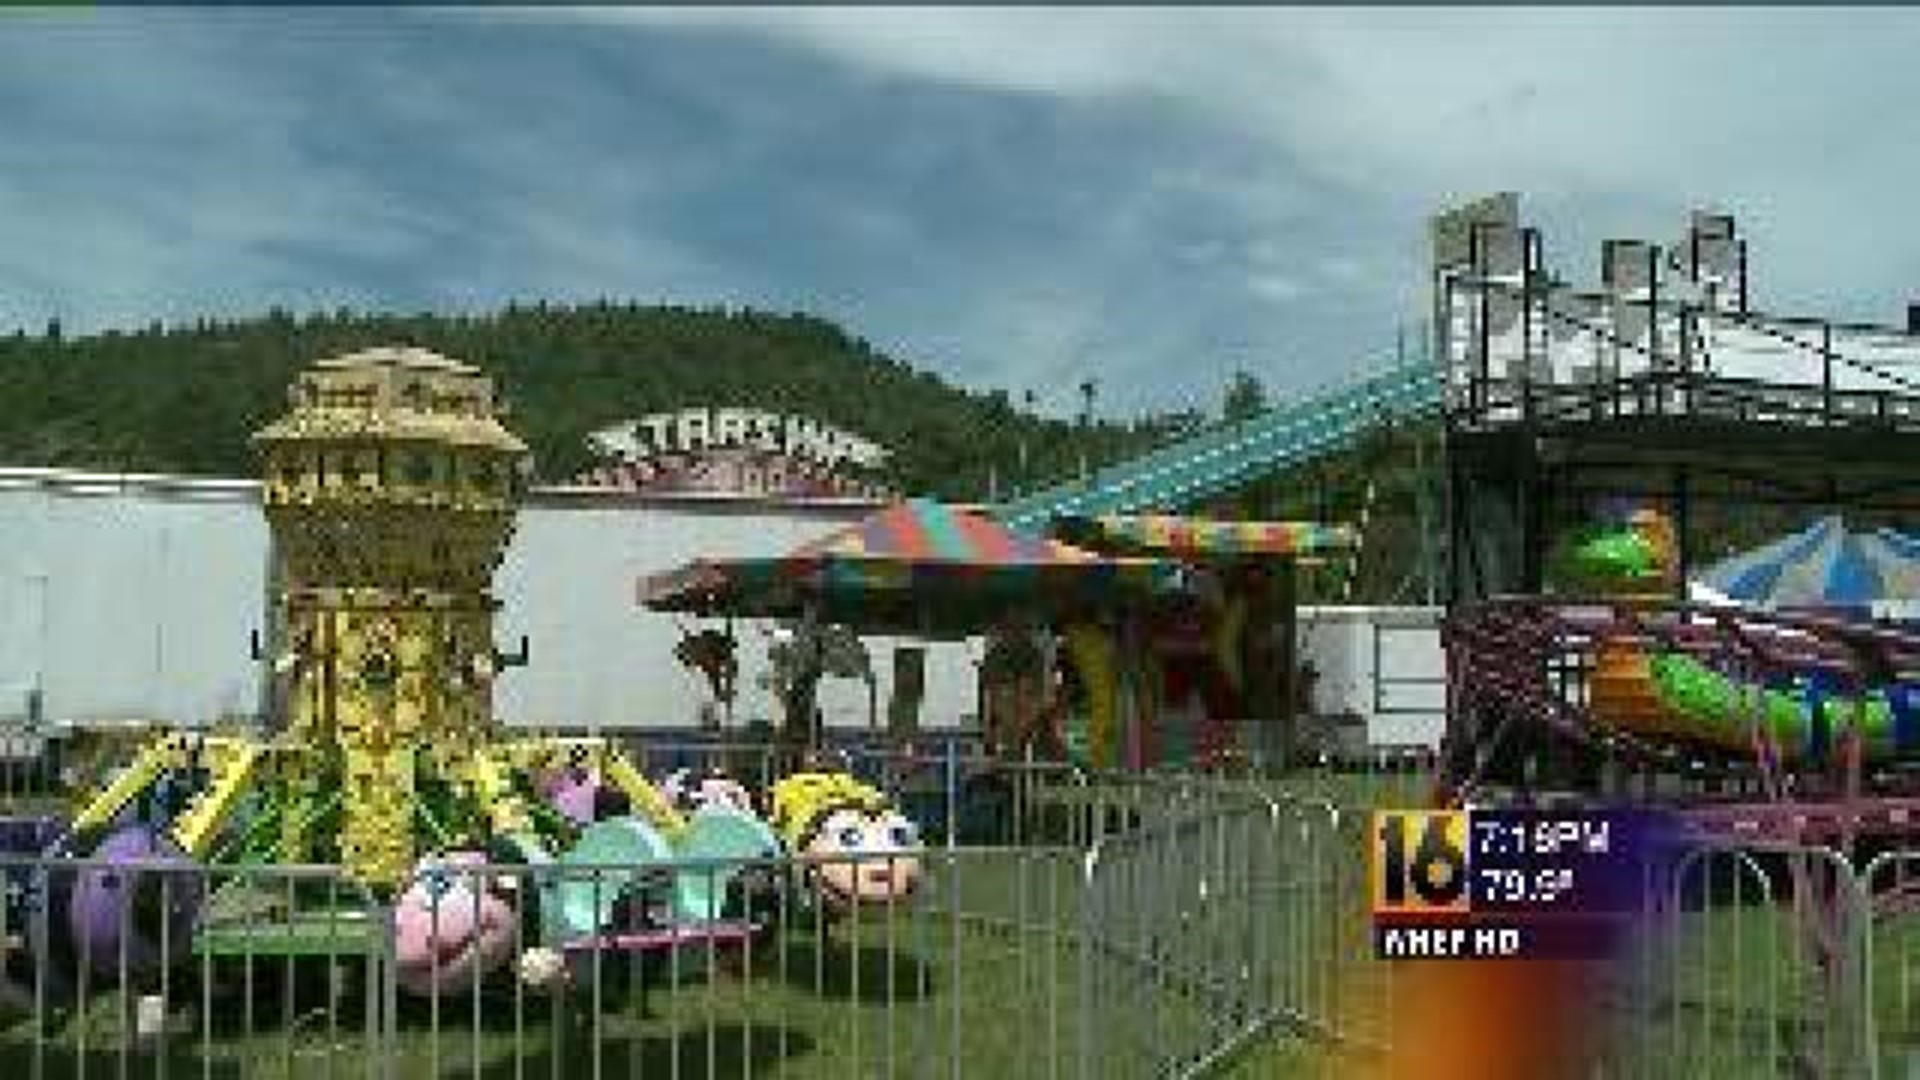 Carbon County Fair Opens